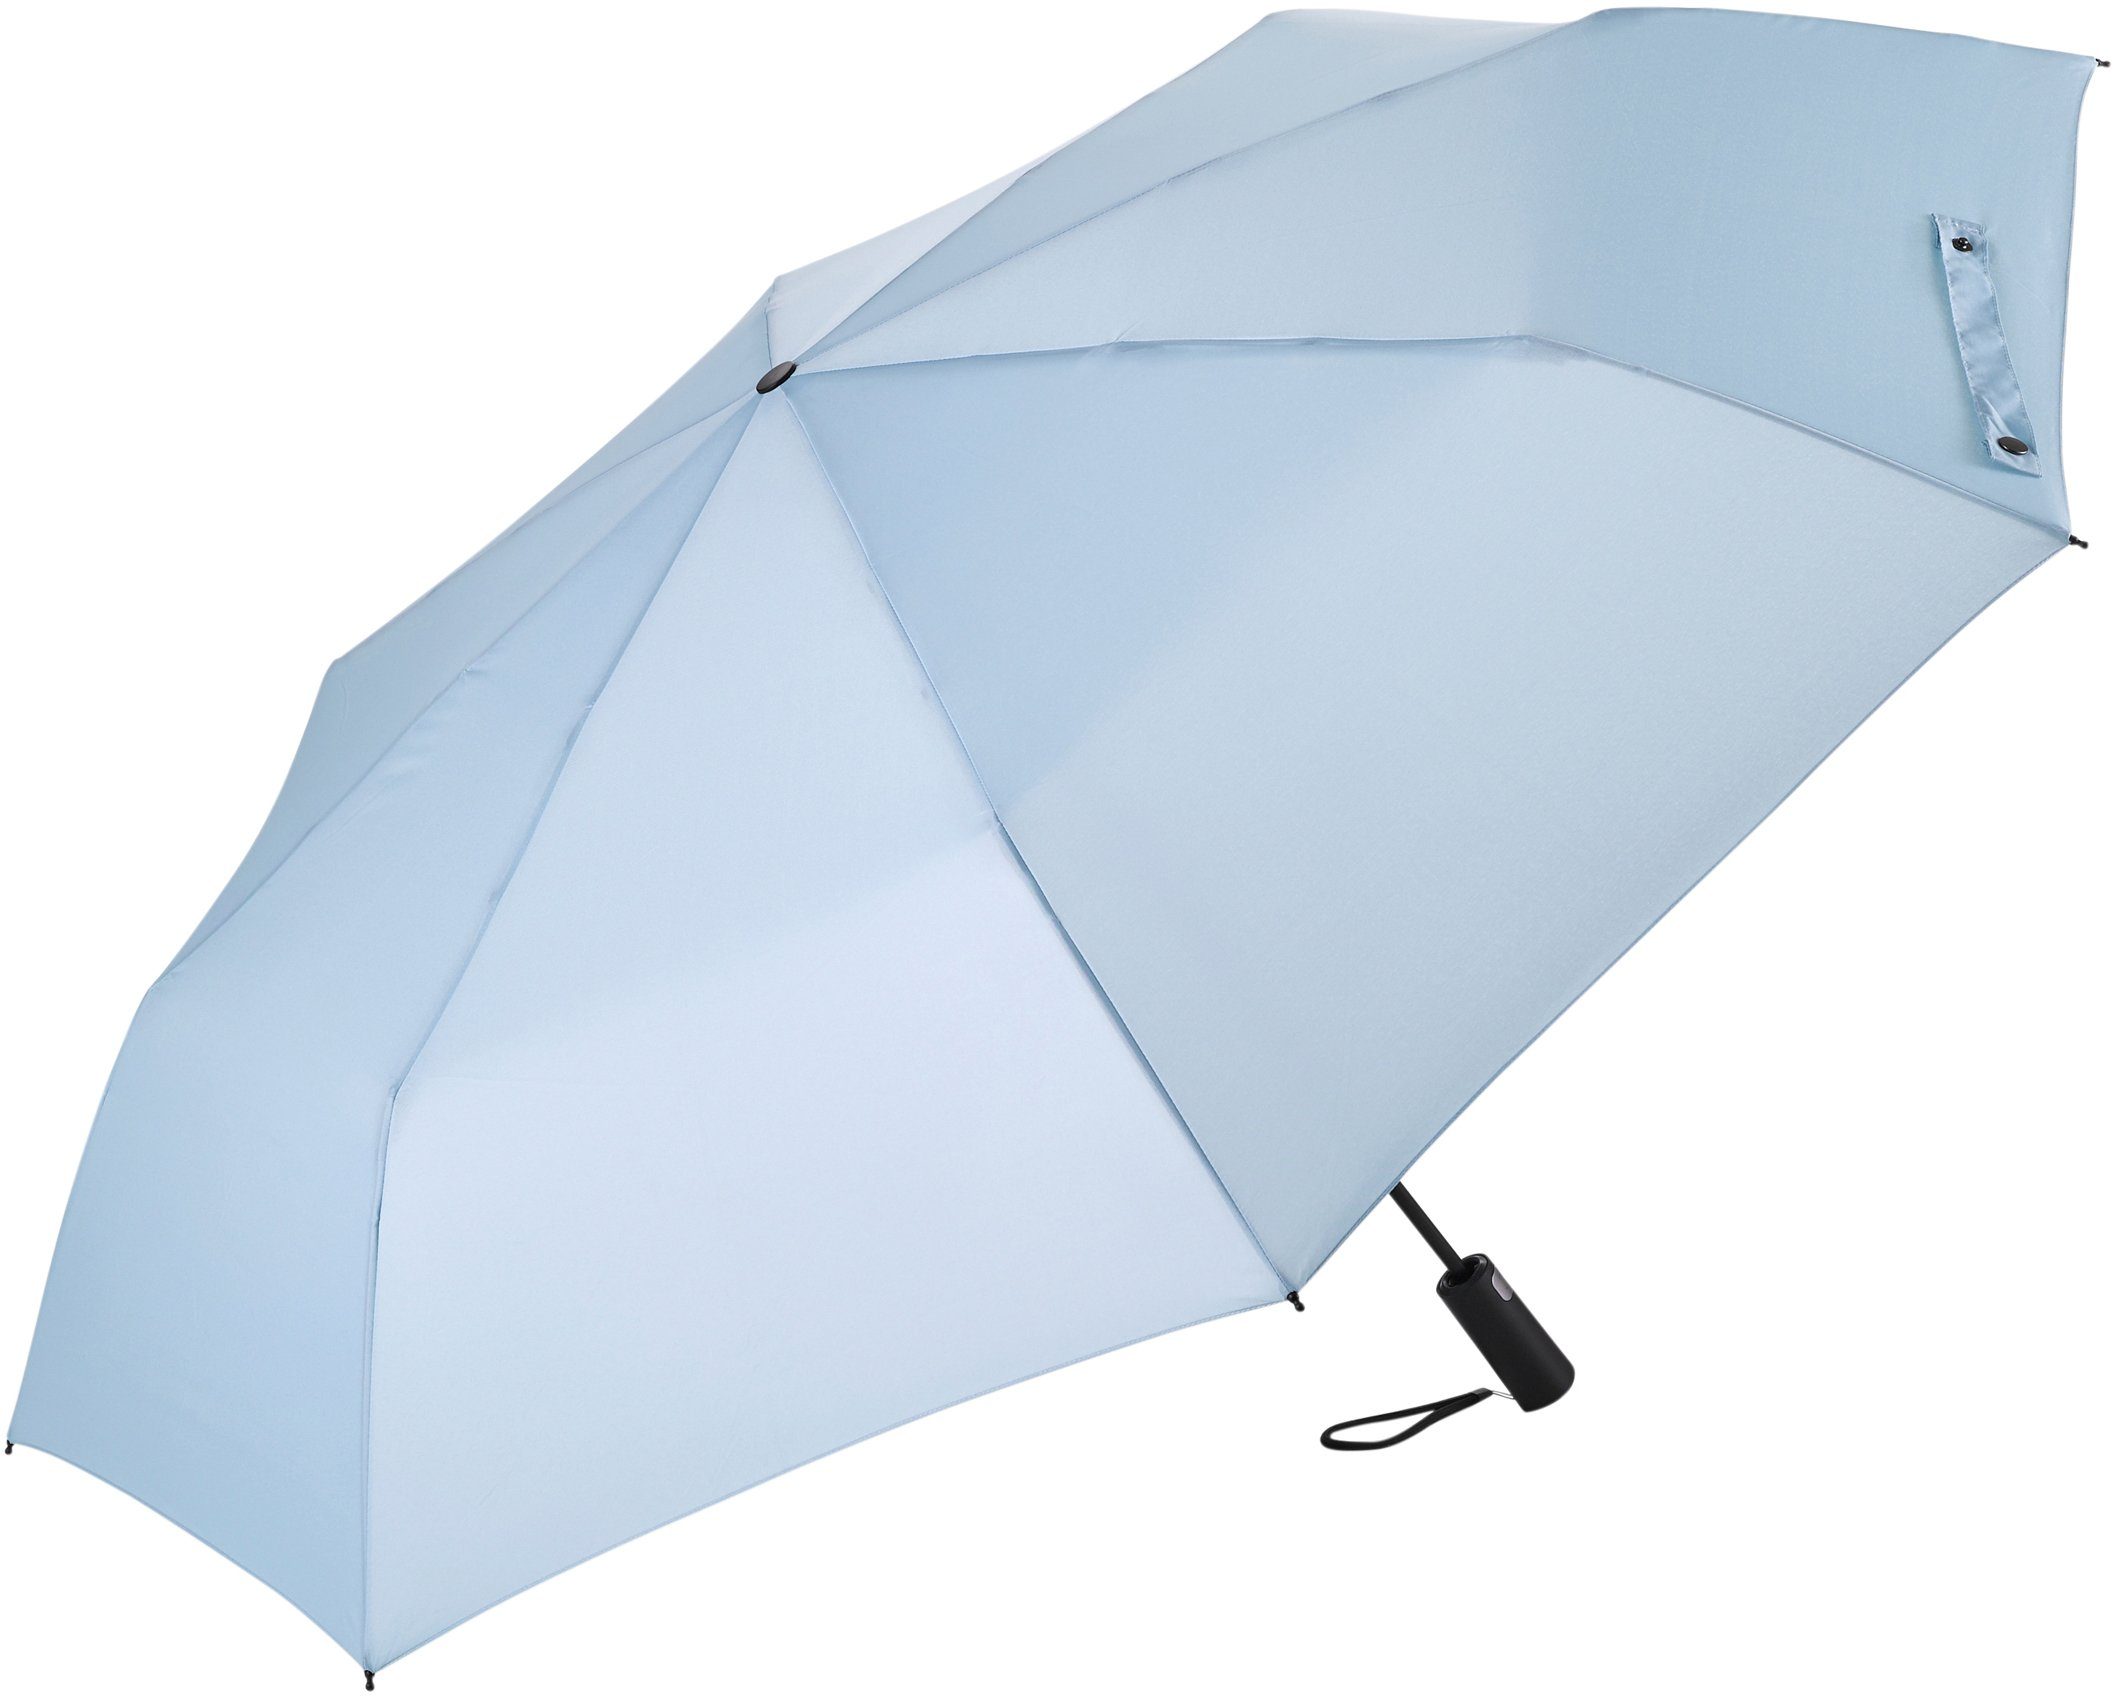 Damen Regenschirme EuroSCHIRM® Partnerschirm Automatik 3432, hellblau